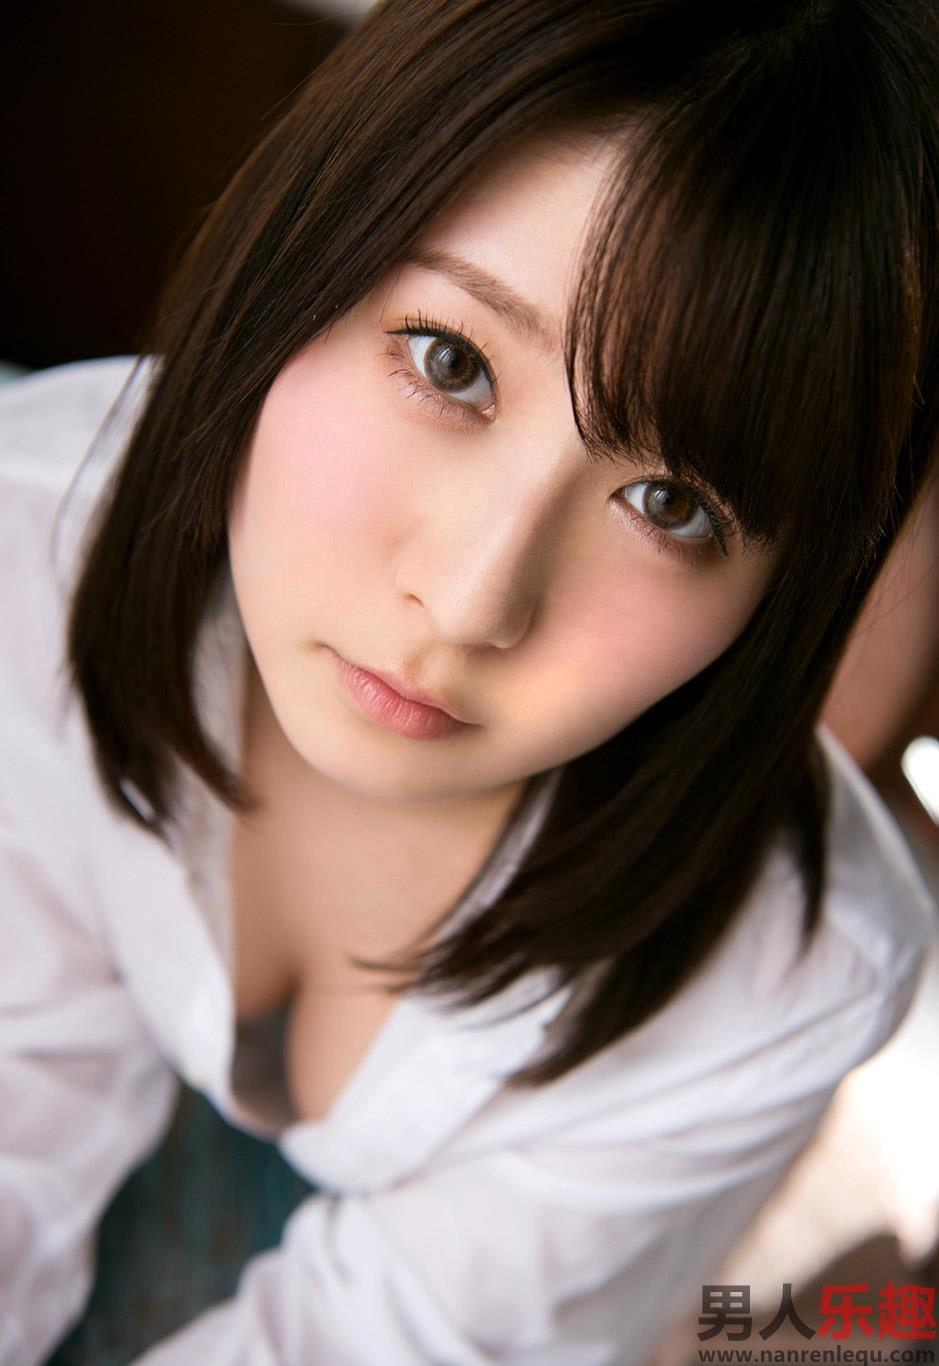 Hot Japanese 66 Girls Rin Asuka 飛鳥りん Sexy Photos Gallery 第3张